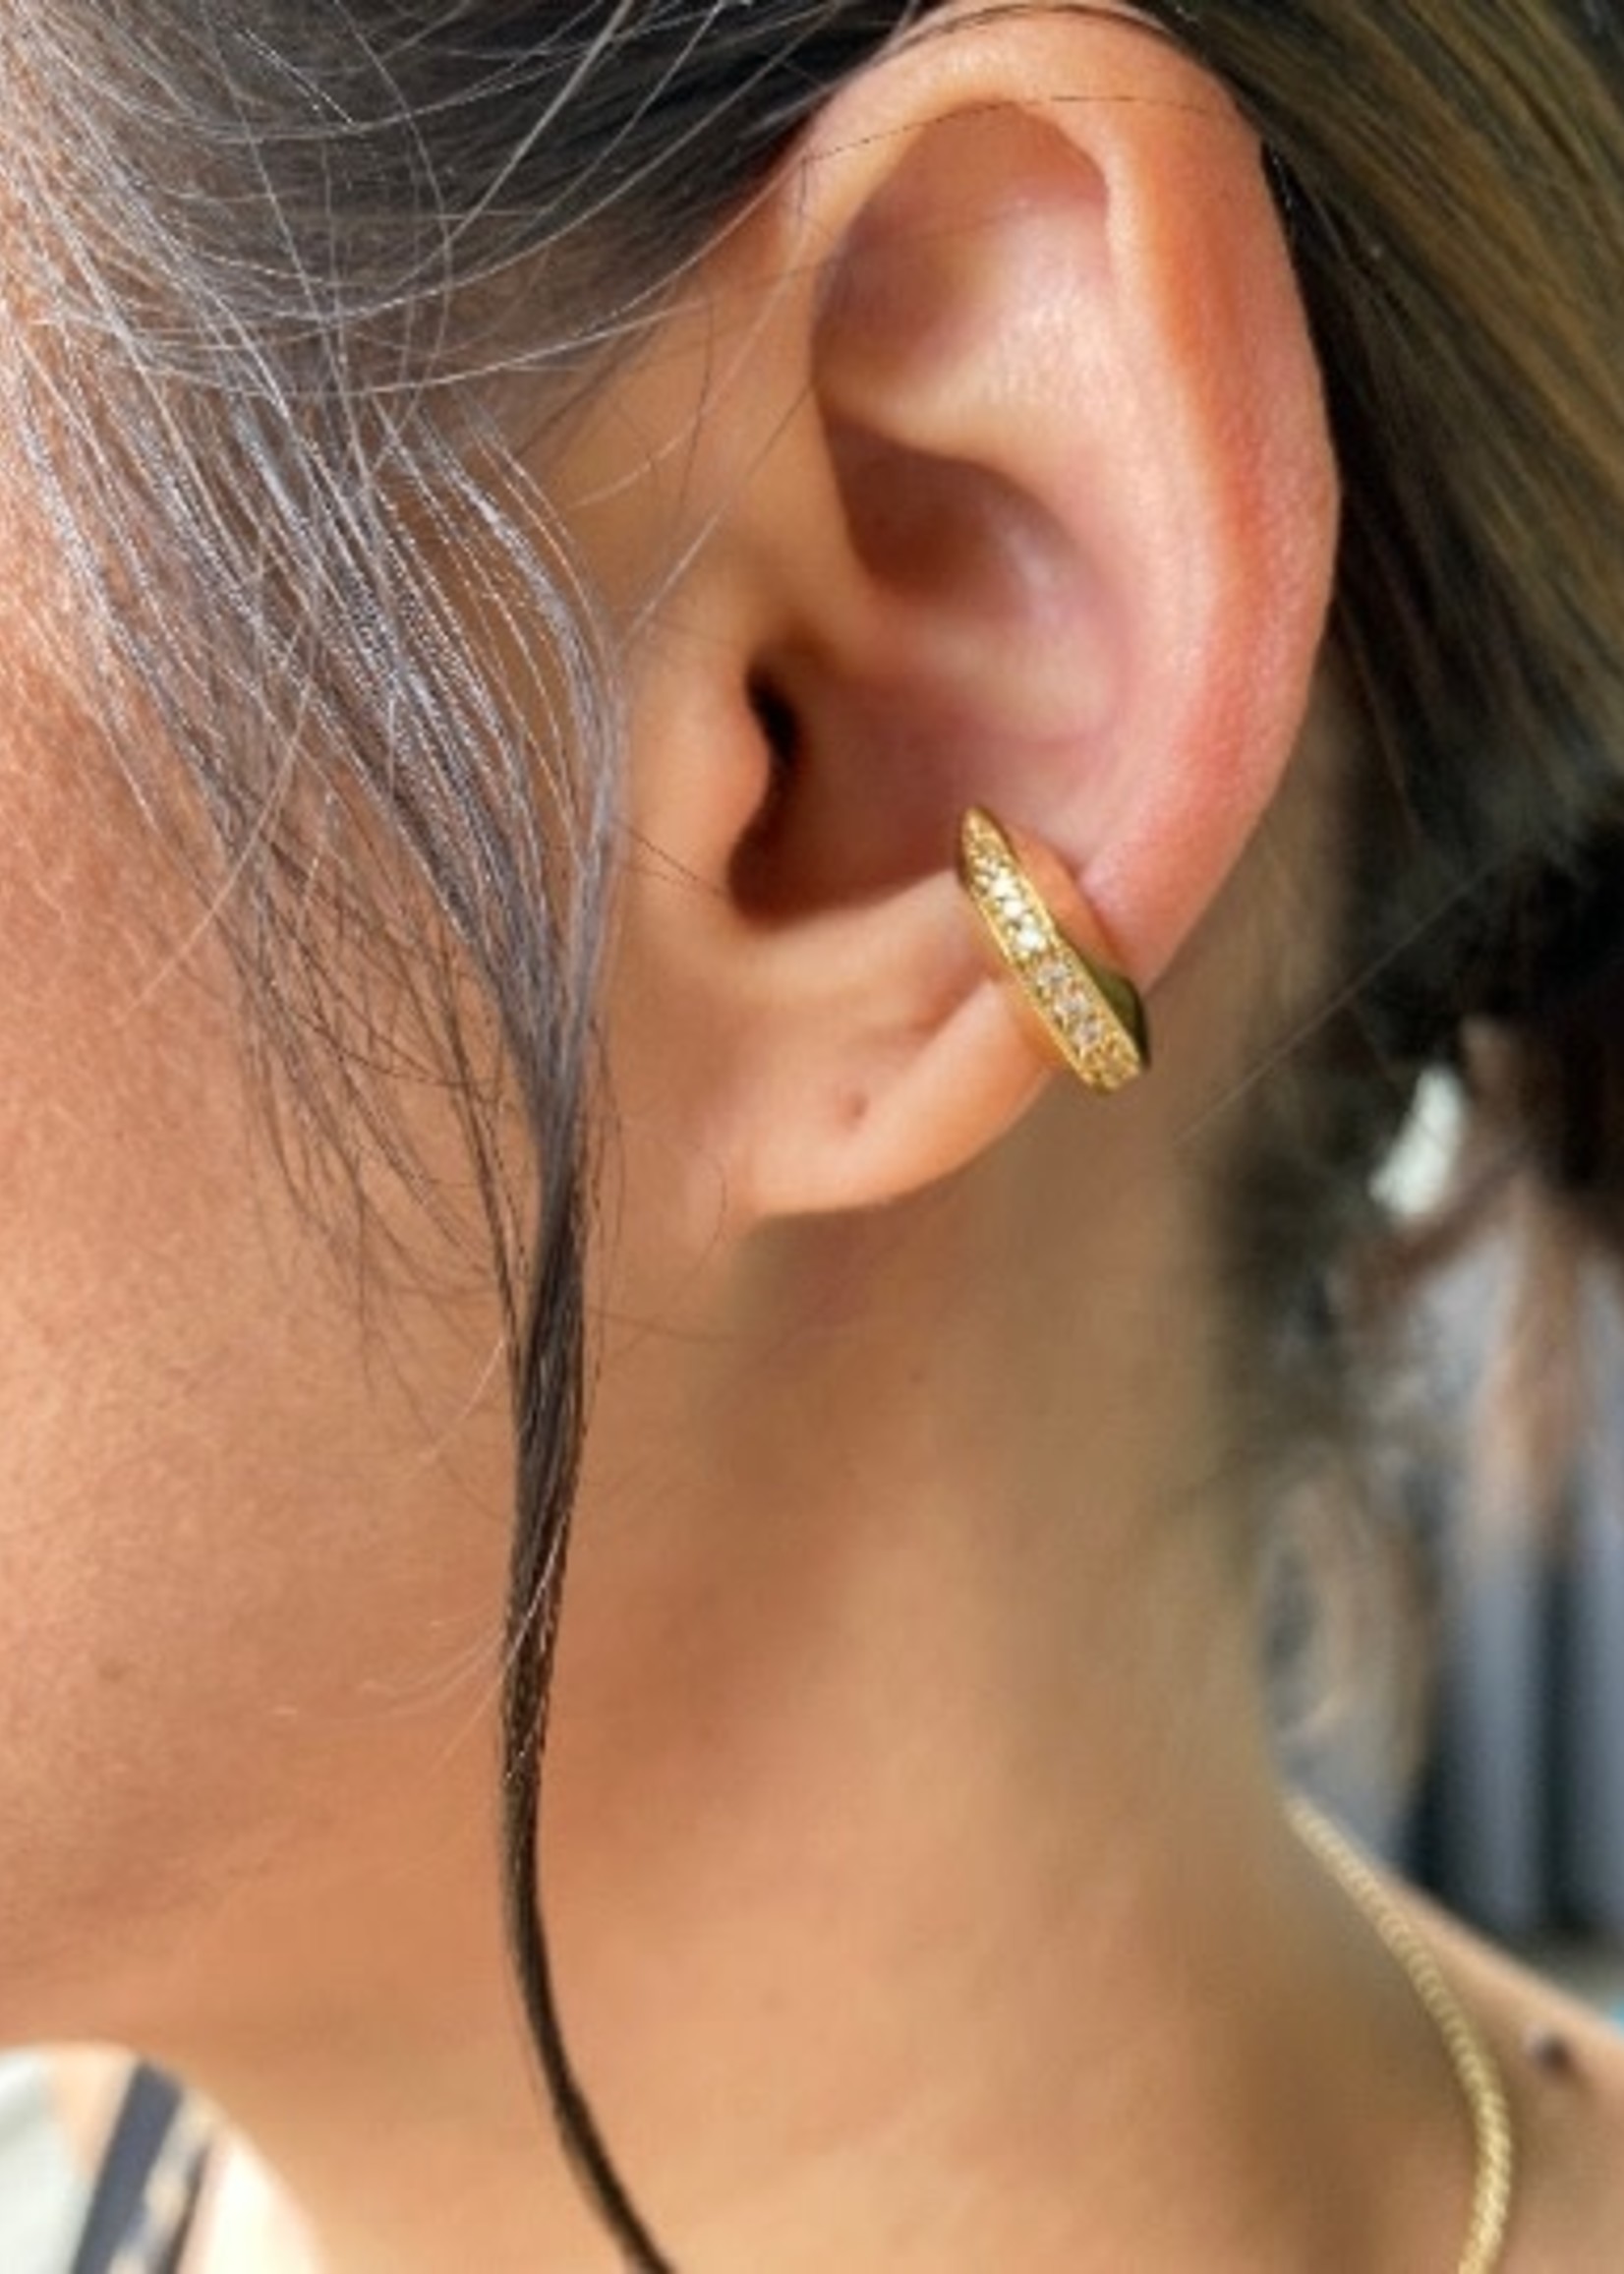 LeBLANC finds Heptagon 18k Gold filled Ear Cuff